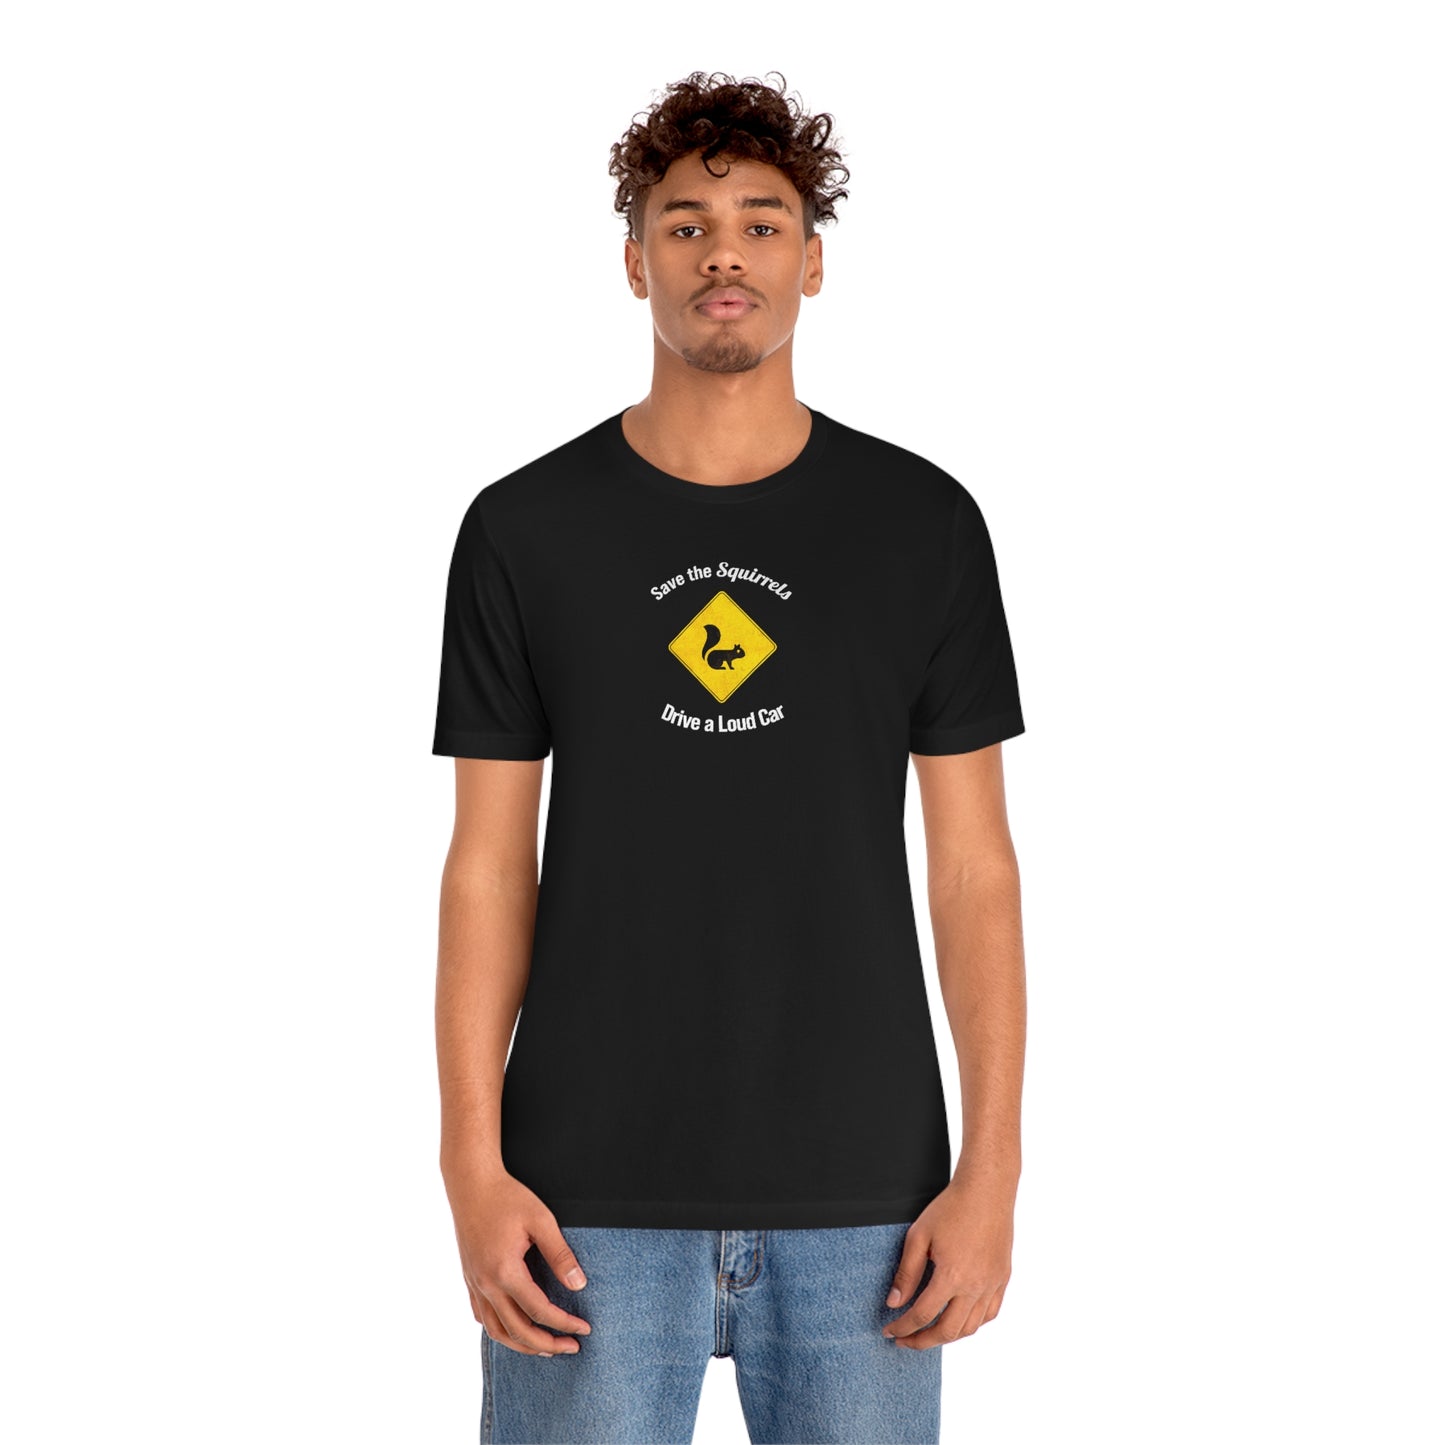 StS (Drive a Loud Car) T-Shirt